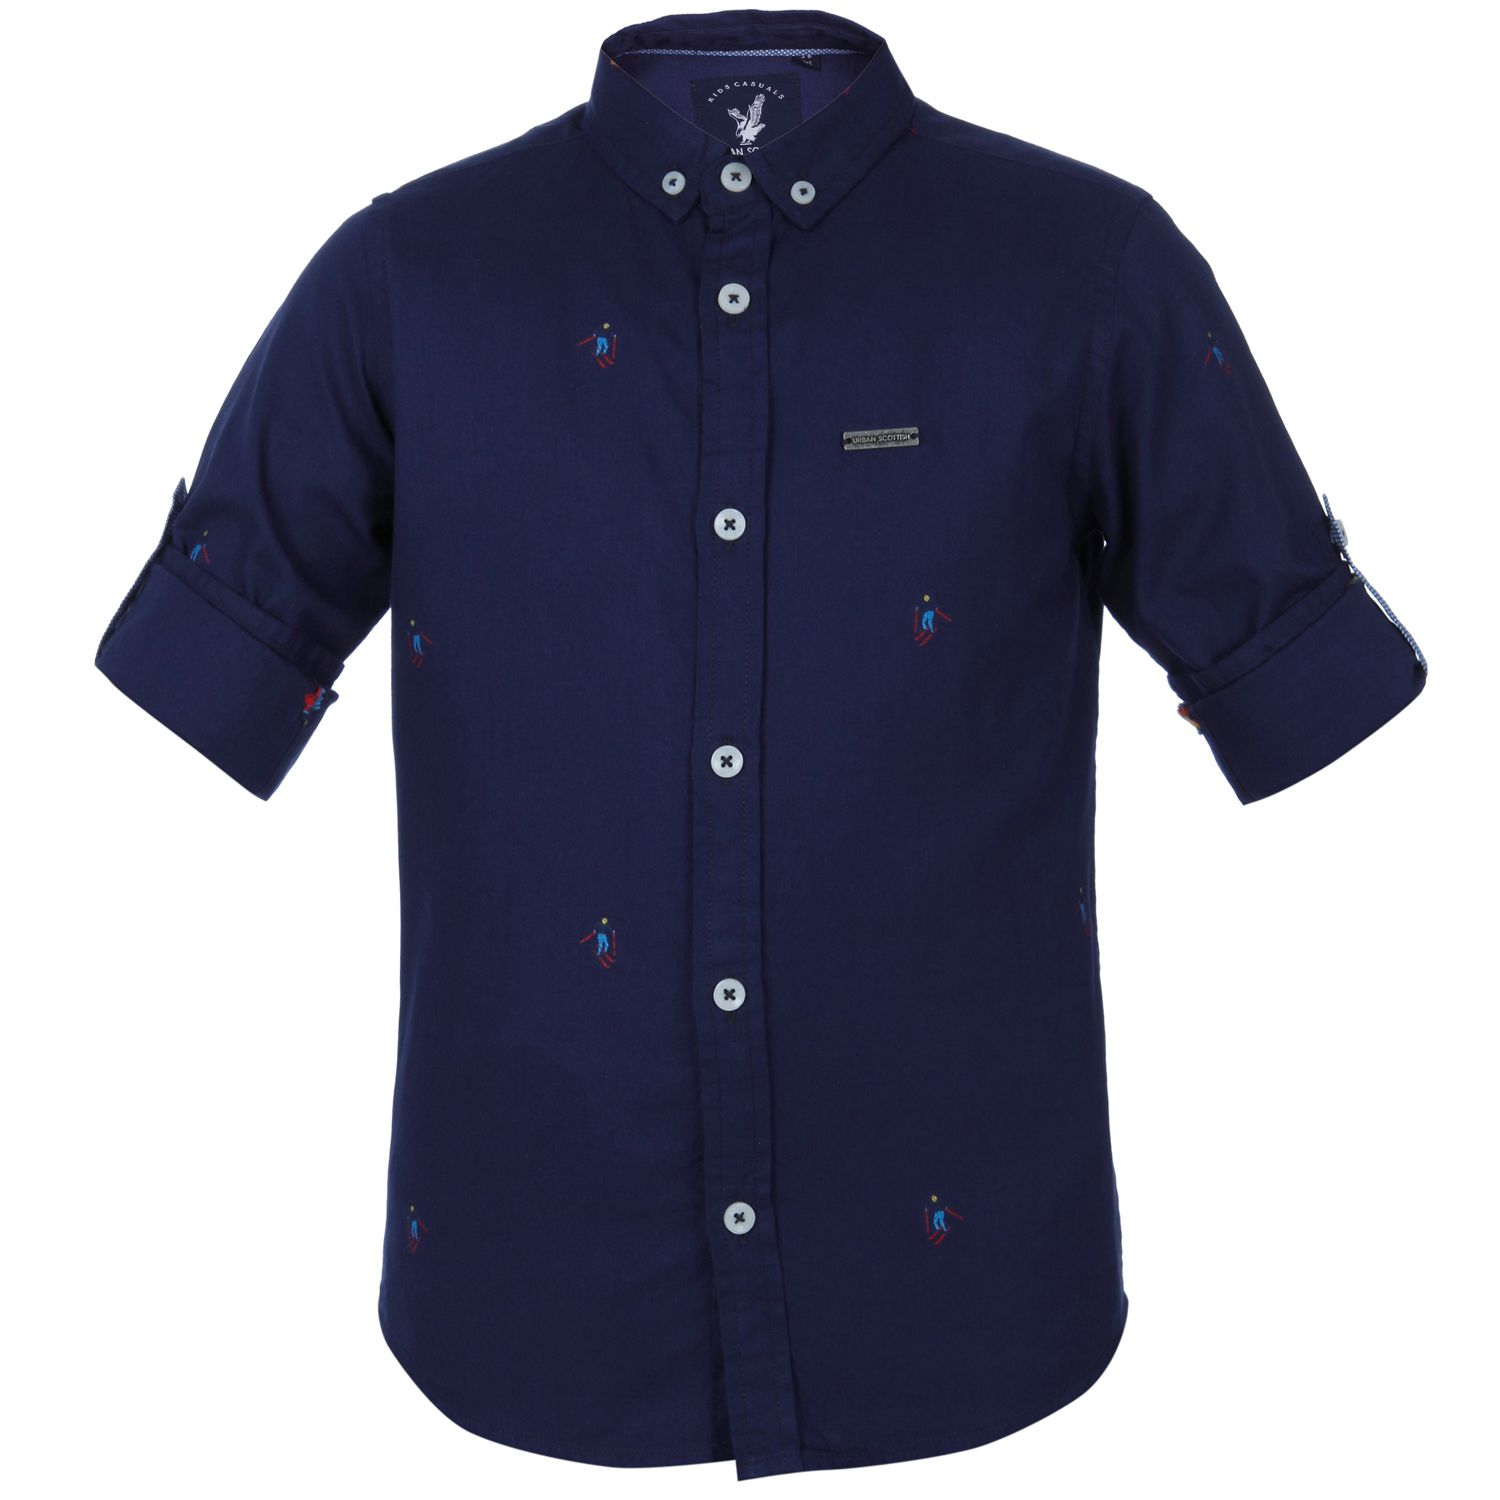     			Urban Scottish Boys Navy Blue Cotton Shirt